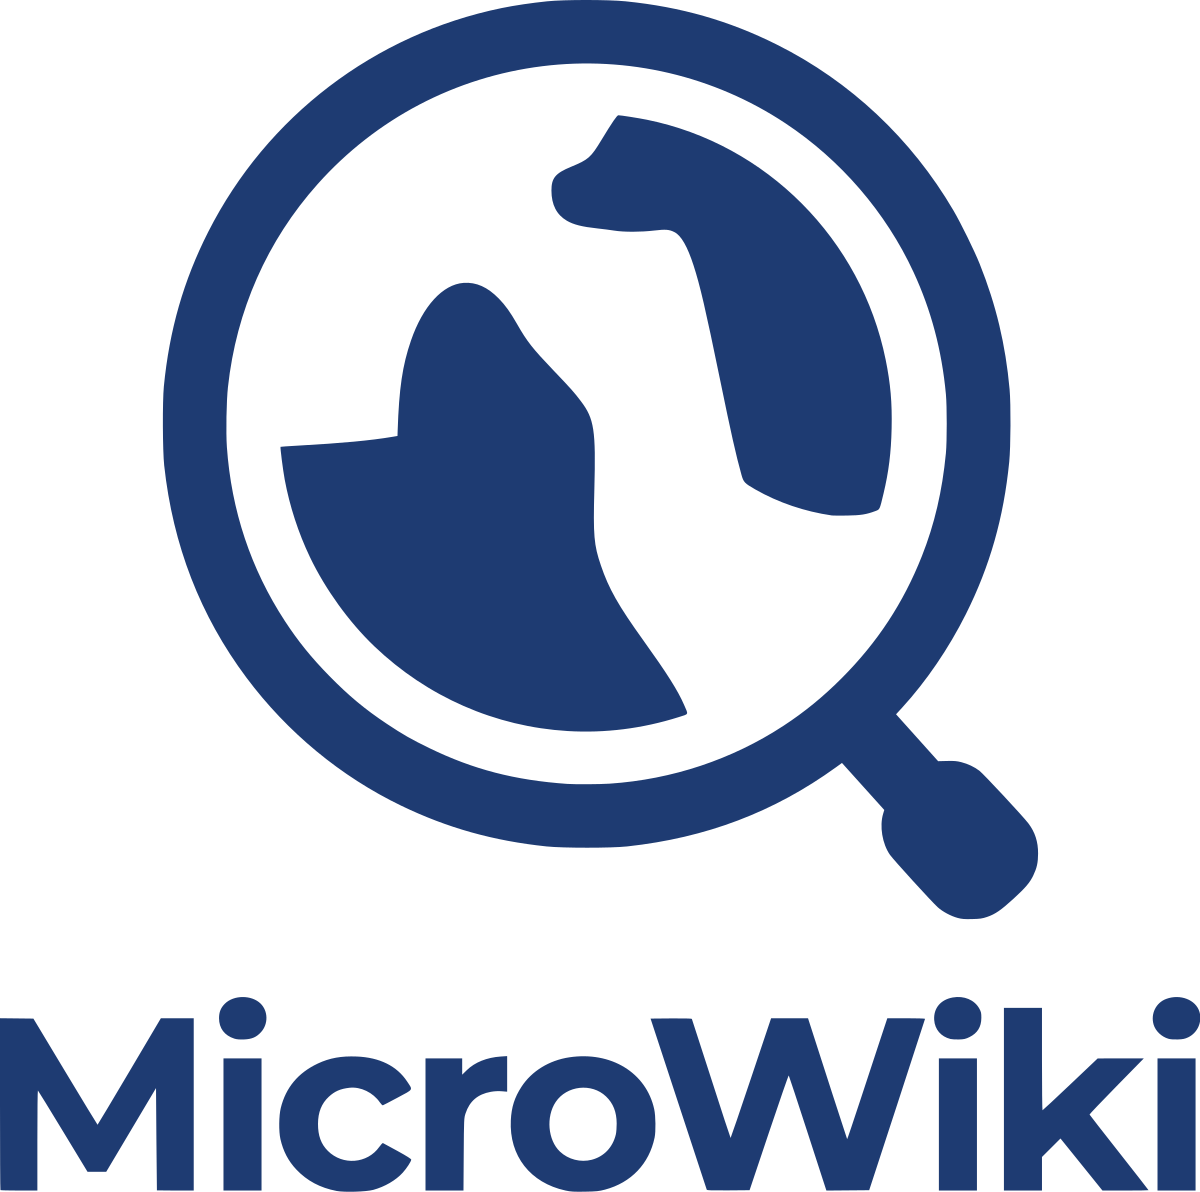 Wilkes-Barre-Scranton Penguins, Micronationals Wiki